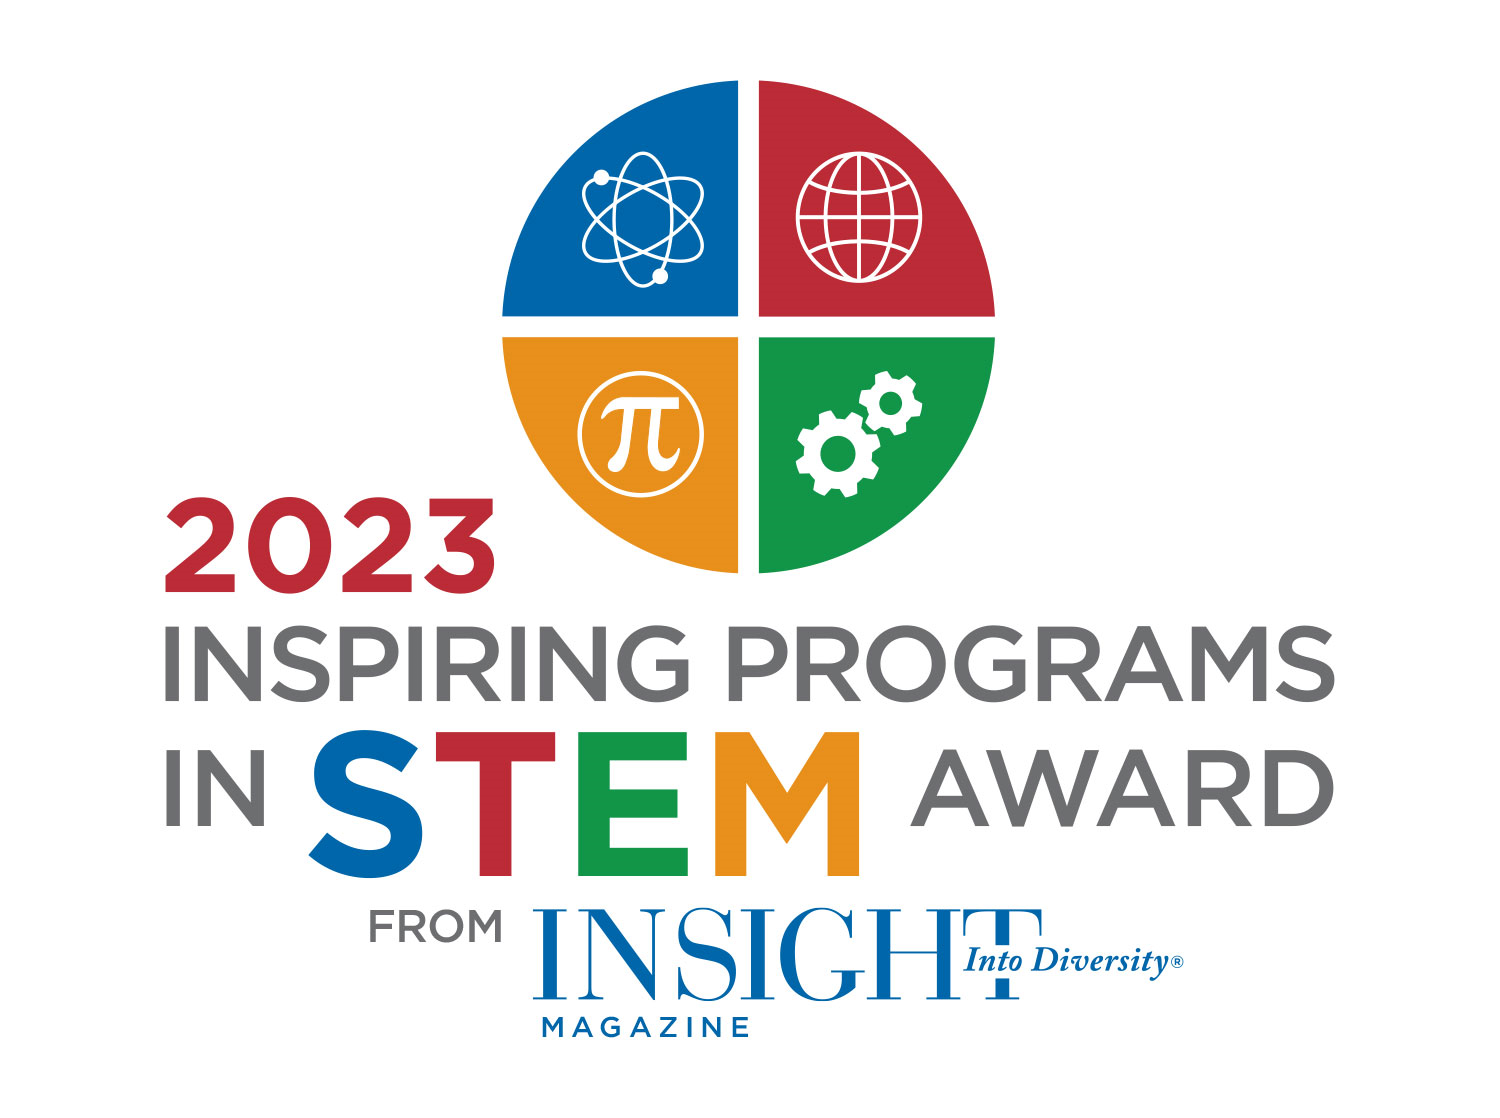 2023 Inspiring Programs in Stem Award from Insight into Diversity Magazine